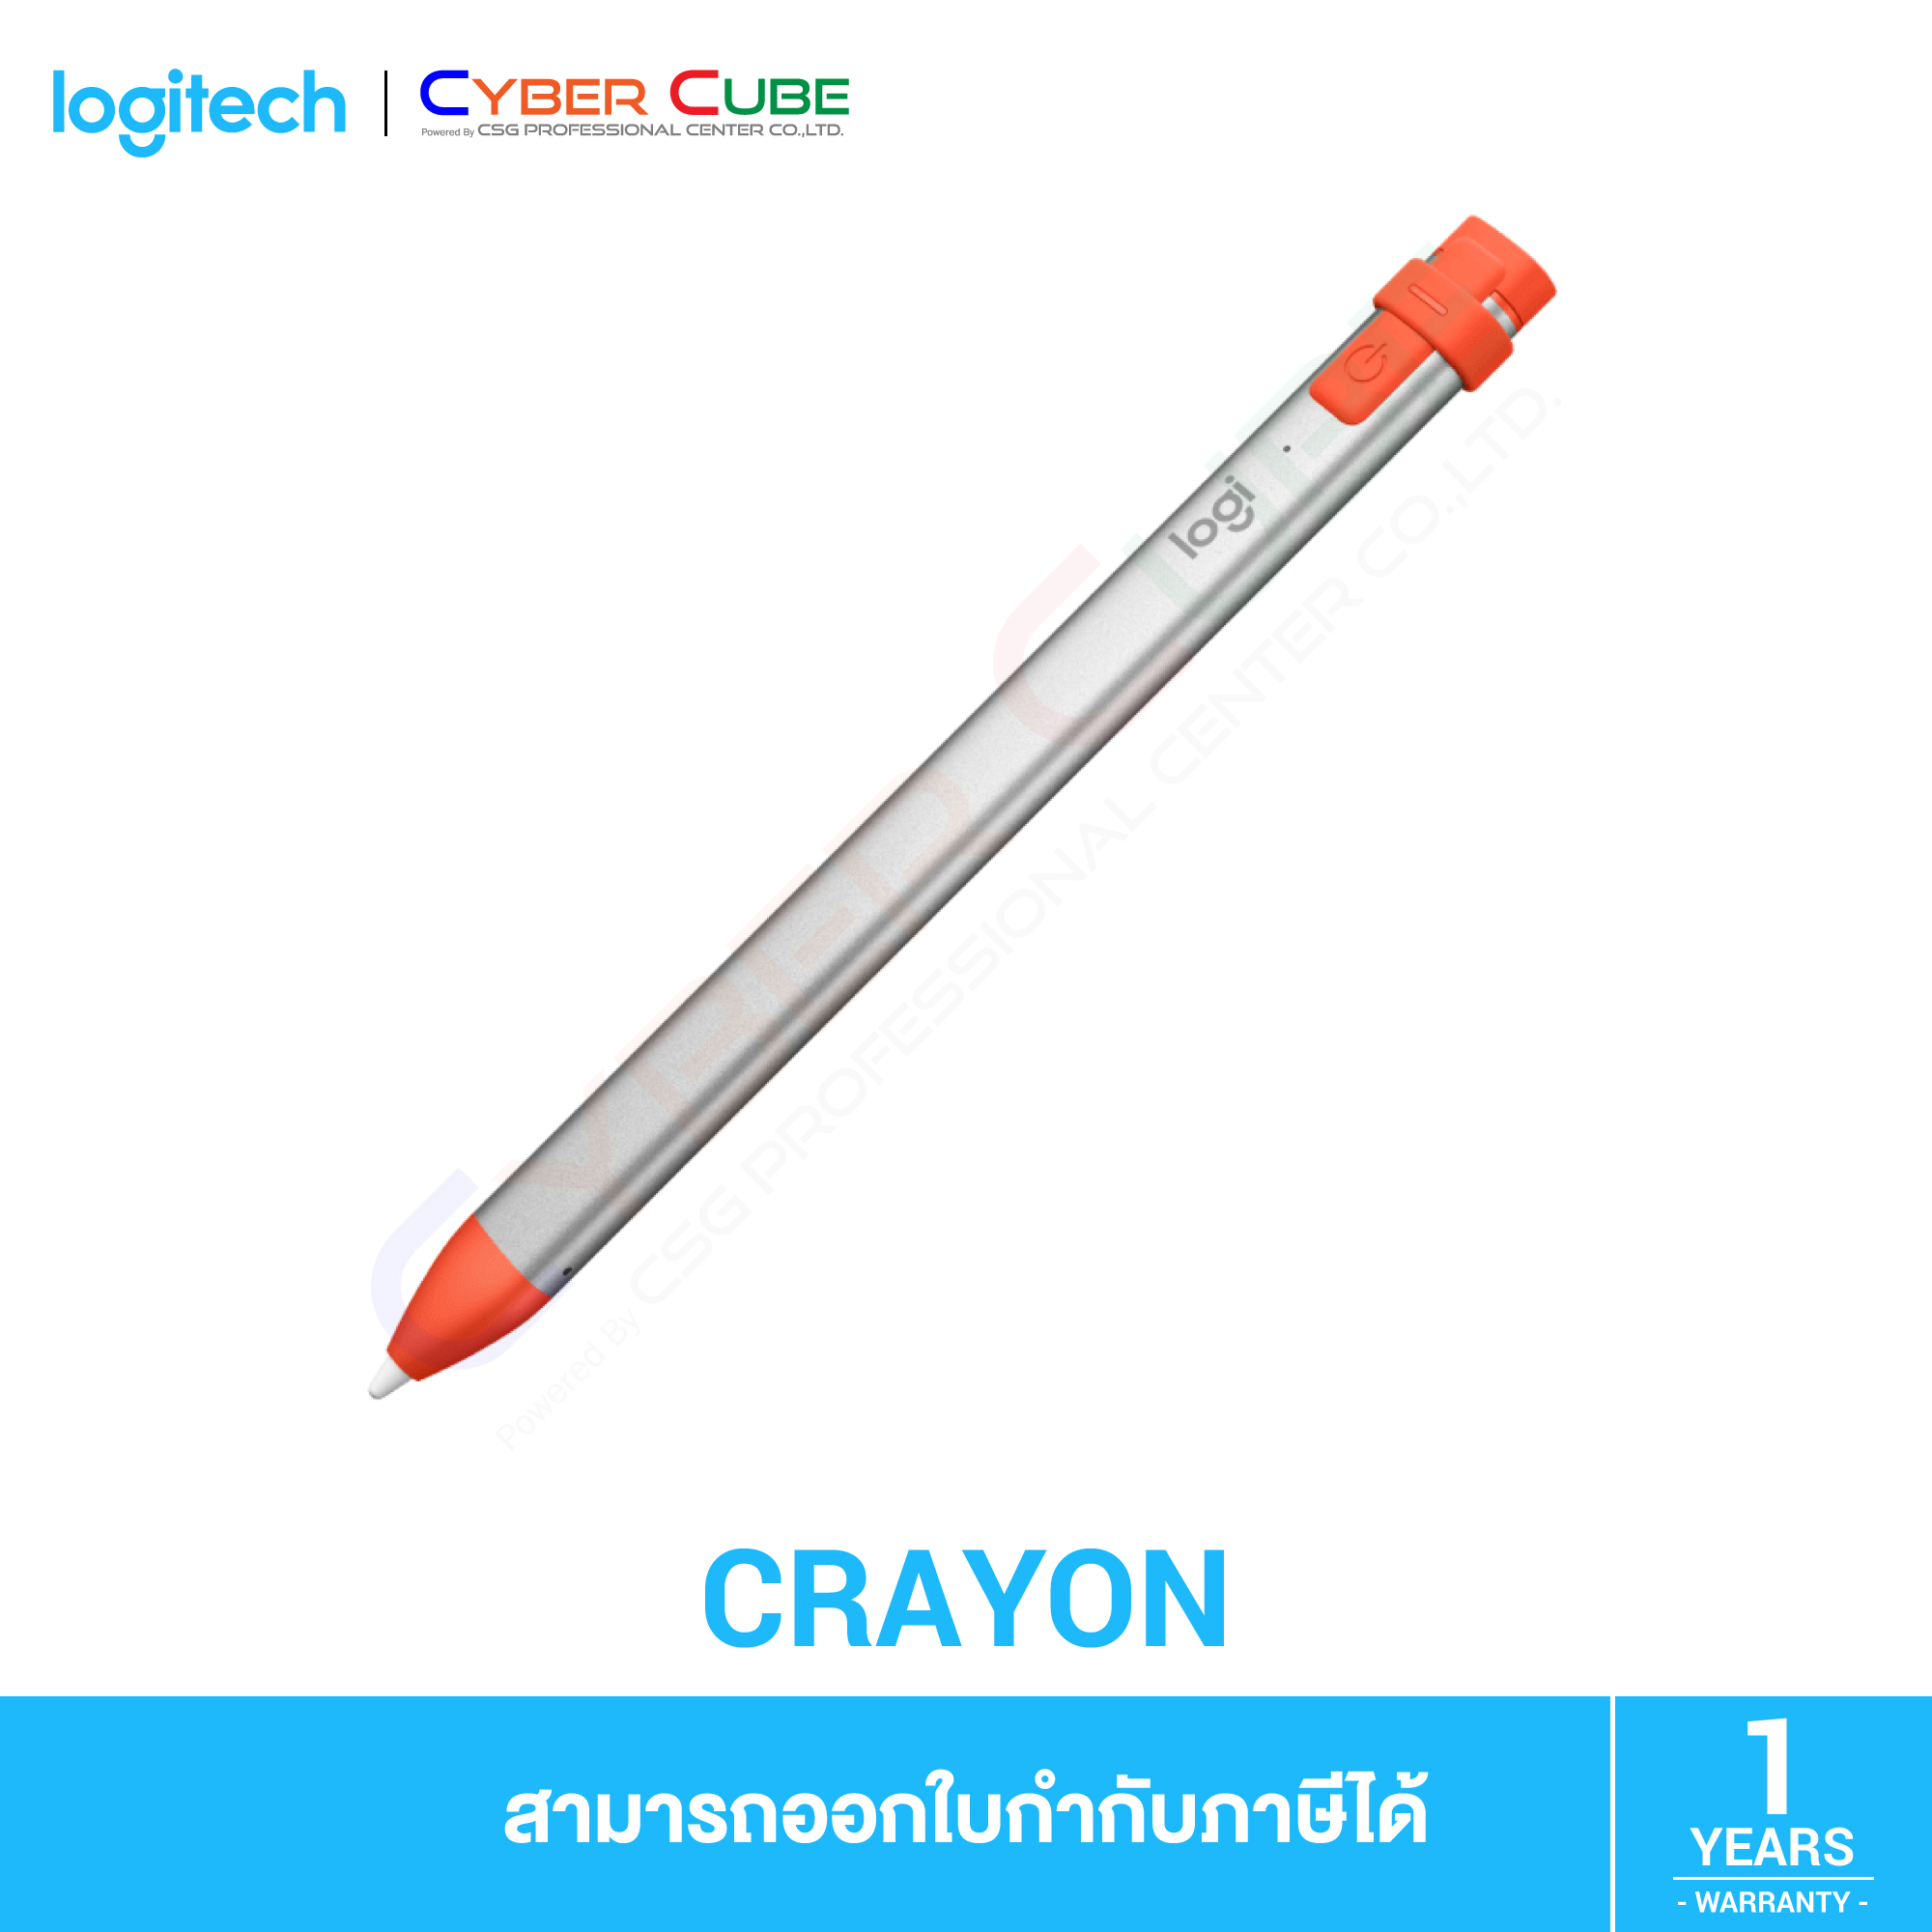 Logitech Crayon Apple Pencil สำหรับ iPad ปี 2018 เป็นต้นไป - เม้าส์ปากกา ปากกาดิจิทัล ( Mouse Pen )